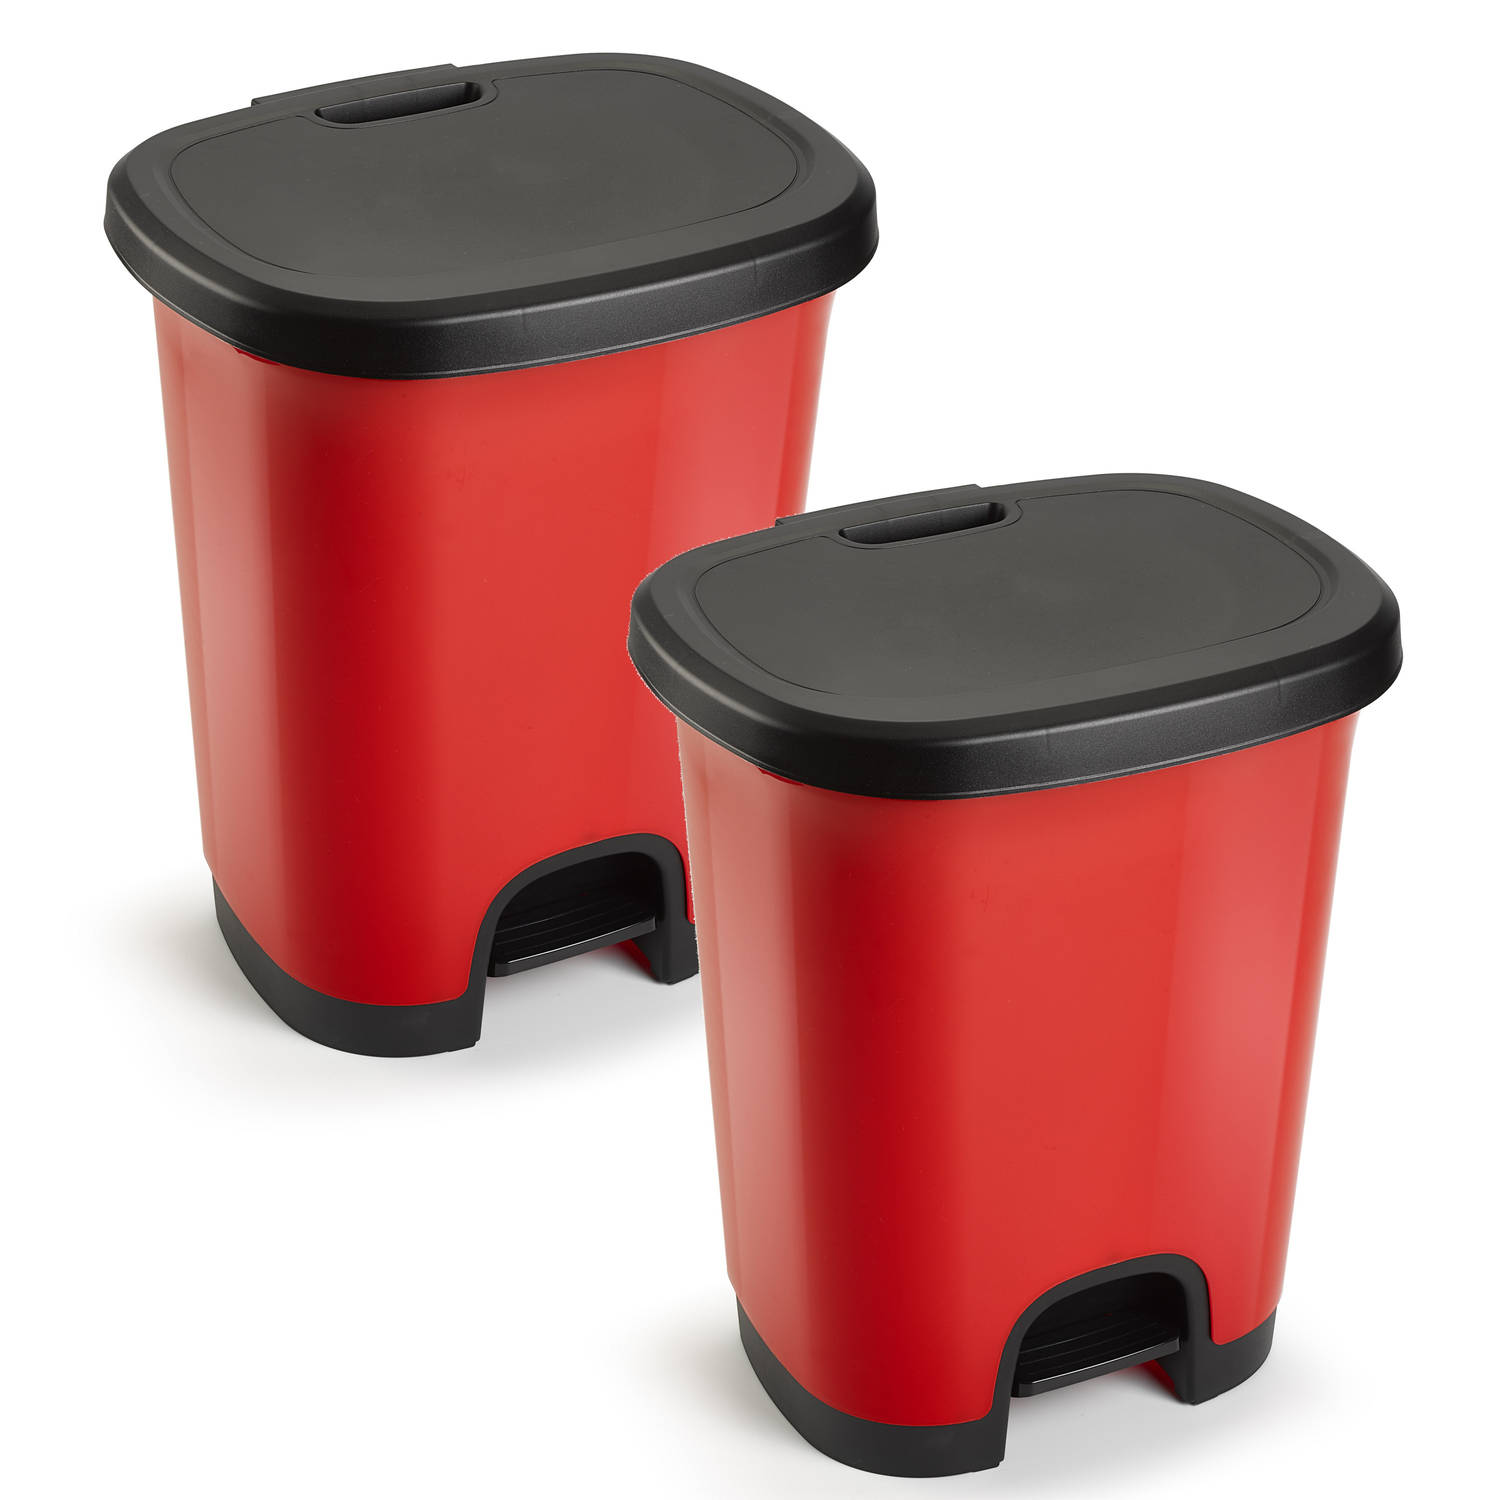 2x Stuks afvalemmer/vuilnisemmer/pedaalemmer liter in het rood/zwart met deksel en pedaal - Pedaalemmers |